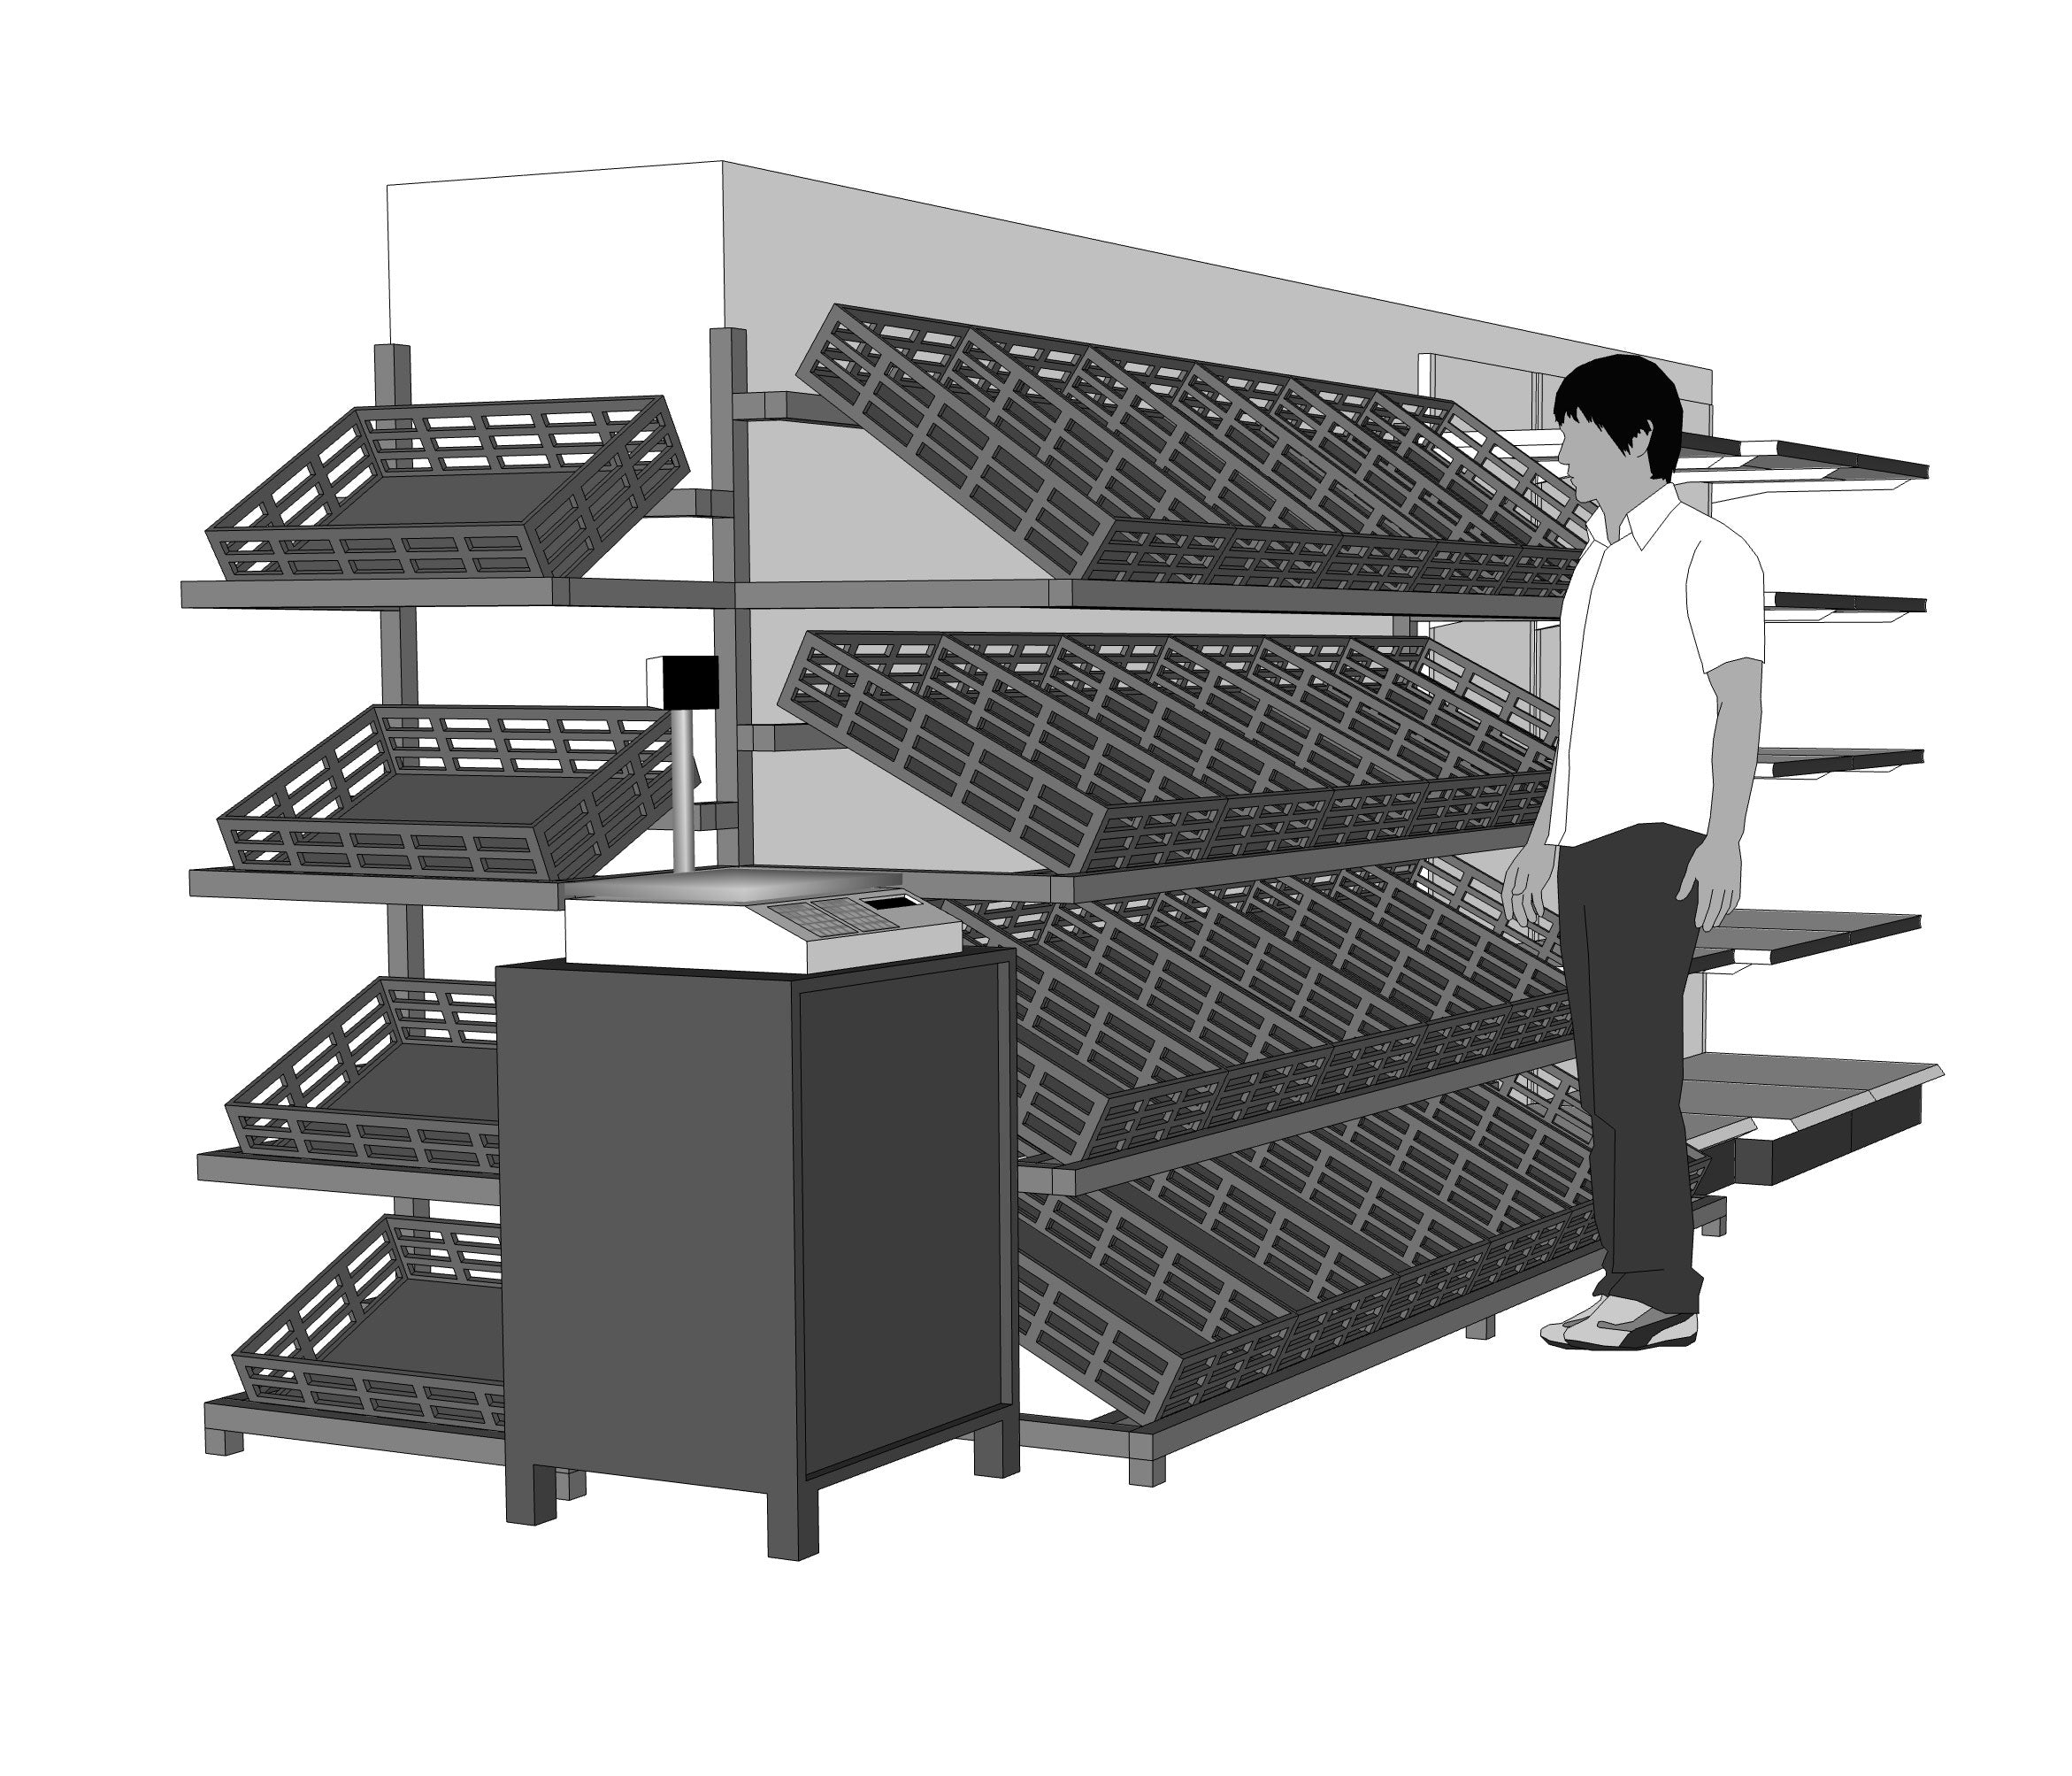 supermarket produce rack displays with slanted baskets